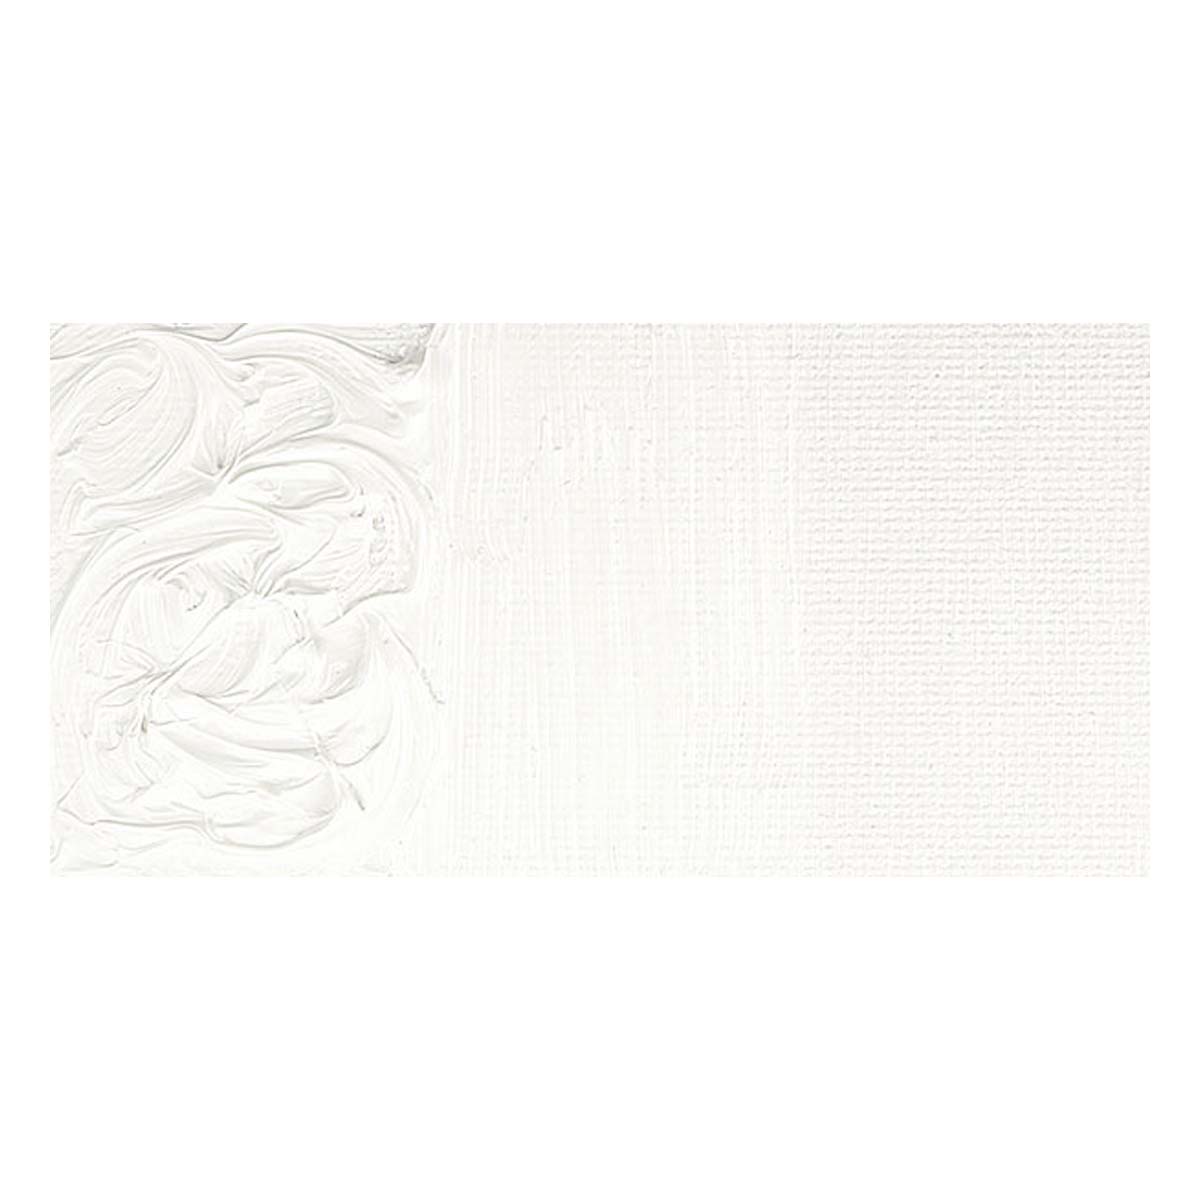 Williamsburg : Oil Paint : 150ml (5oz): Safflower Porcelain White